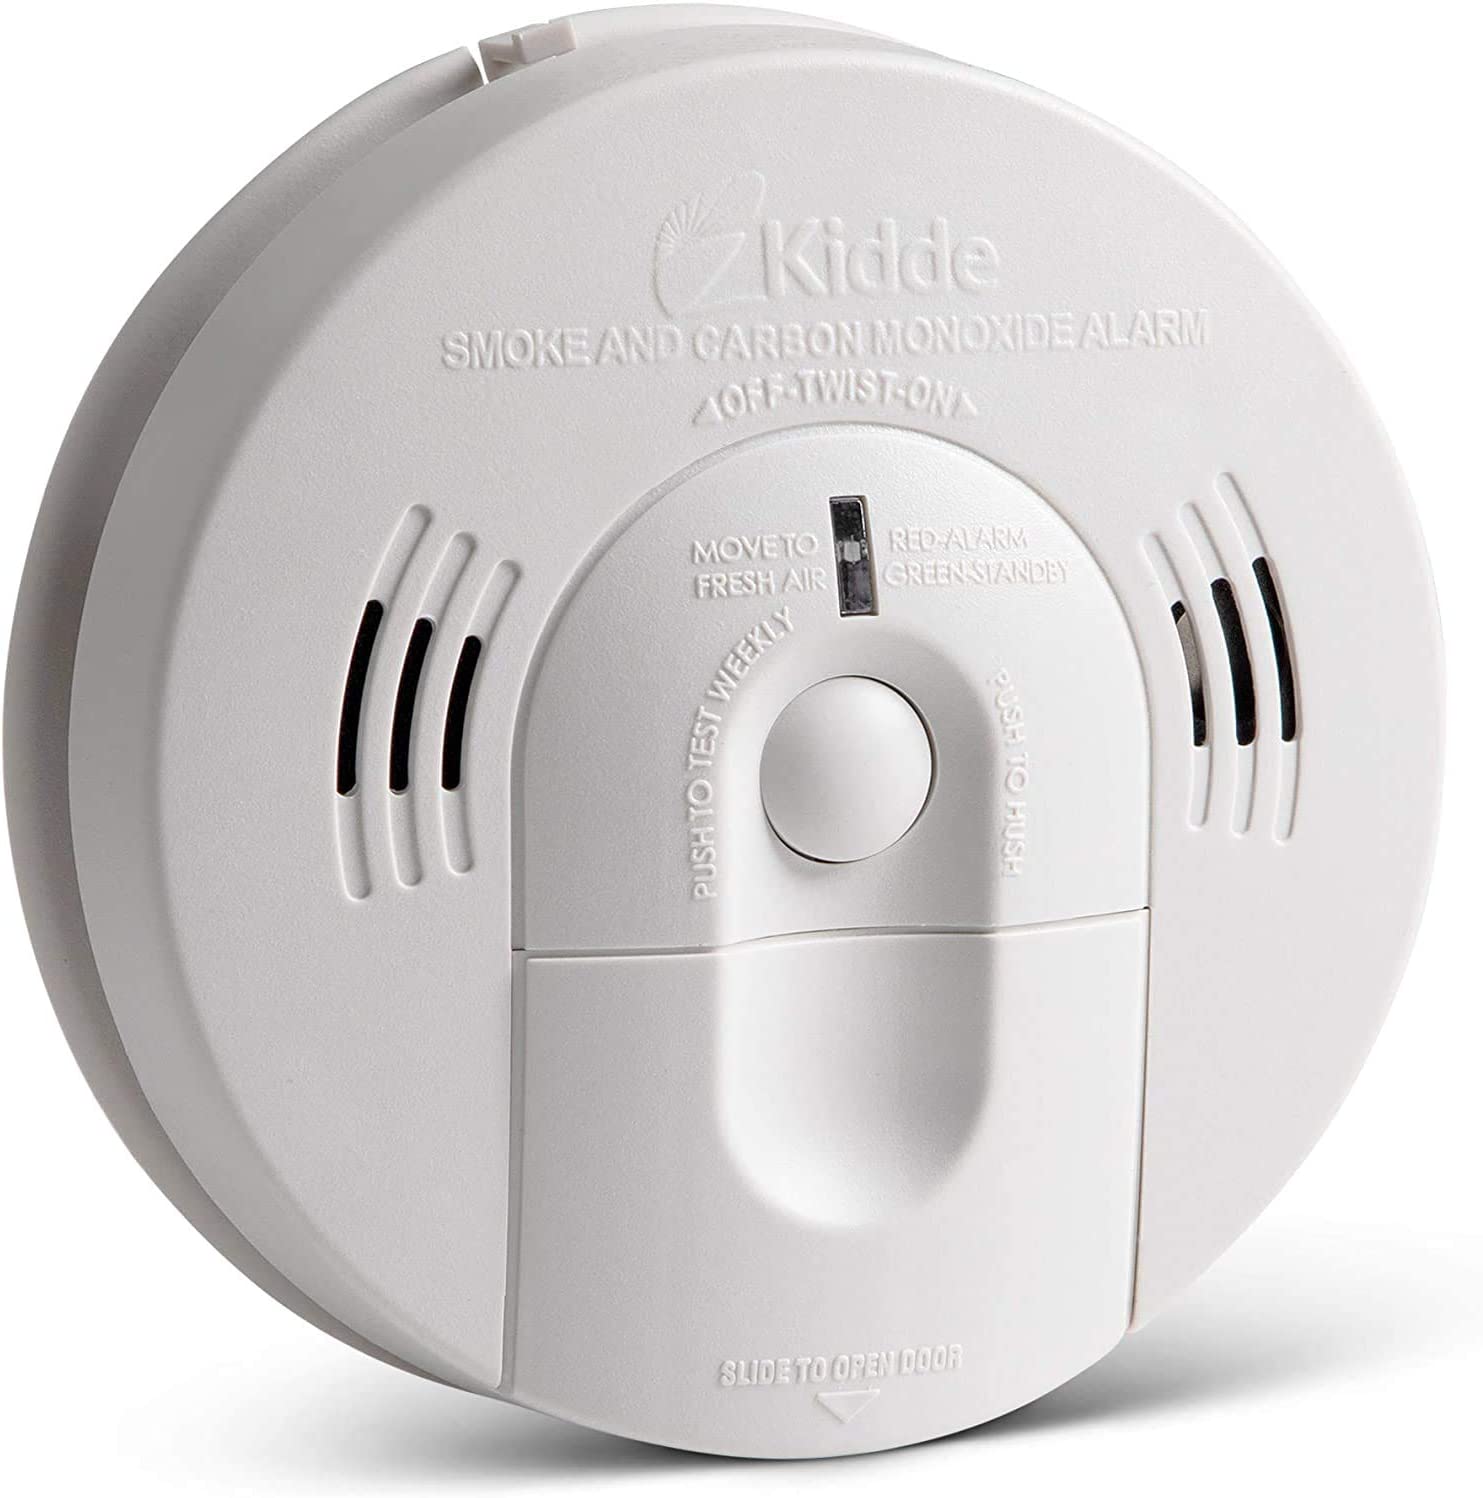 Kidde Battery Powered Combination Smoke & Carbon Monoxide Alarm w/ Voice Alert $24.00 + Free Shipping w/ Prime or on $25+